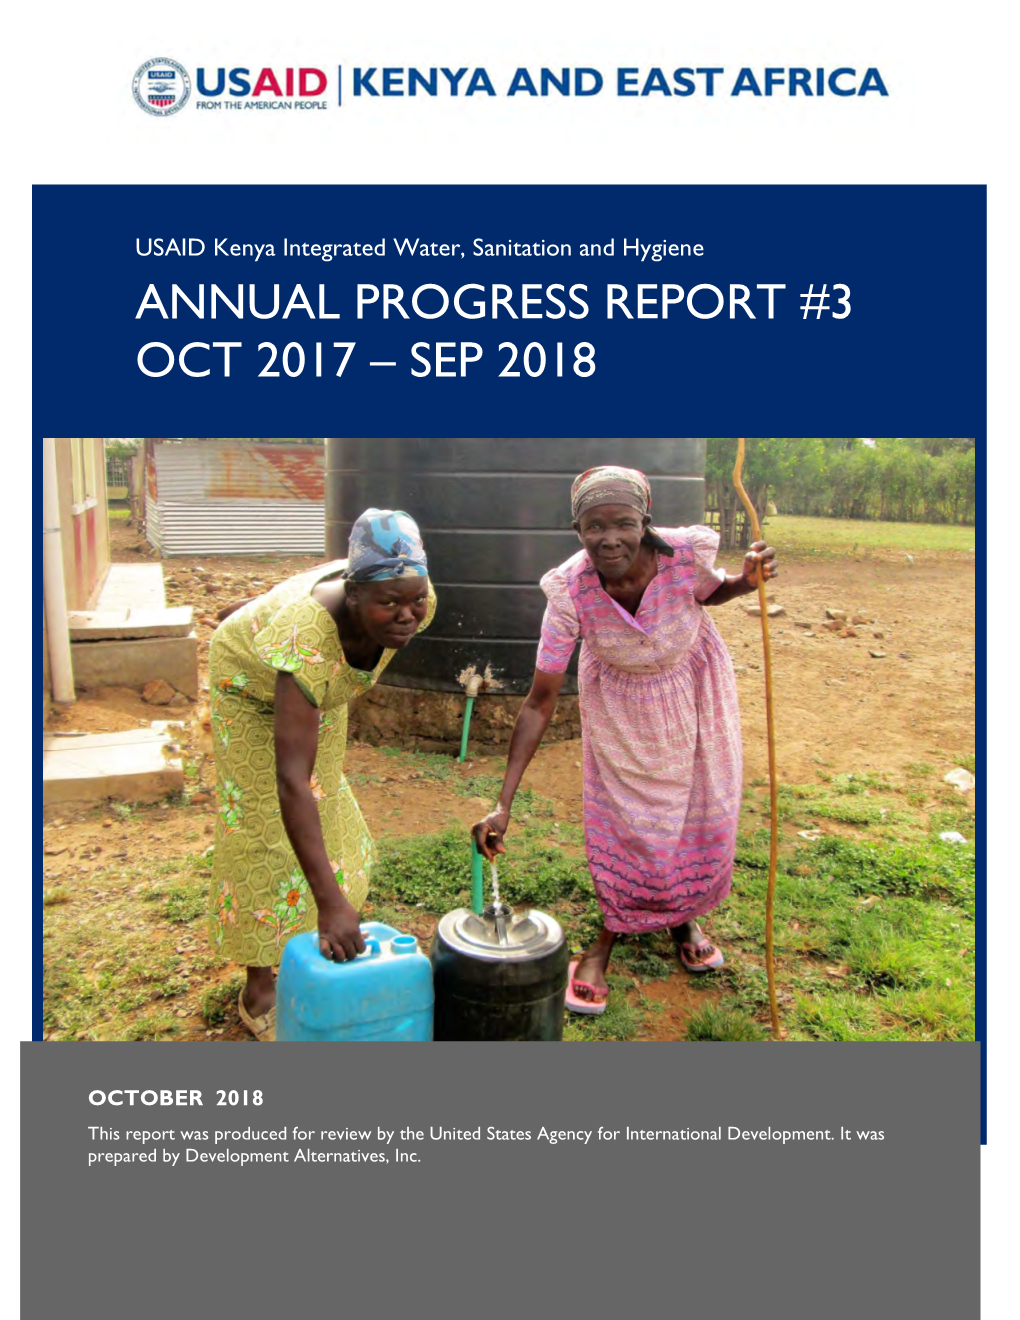 Annual Progress Report #3 Oct 2017 – Sep 2018